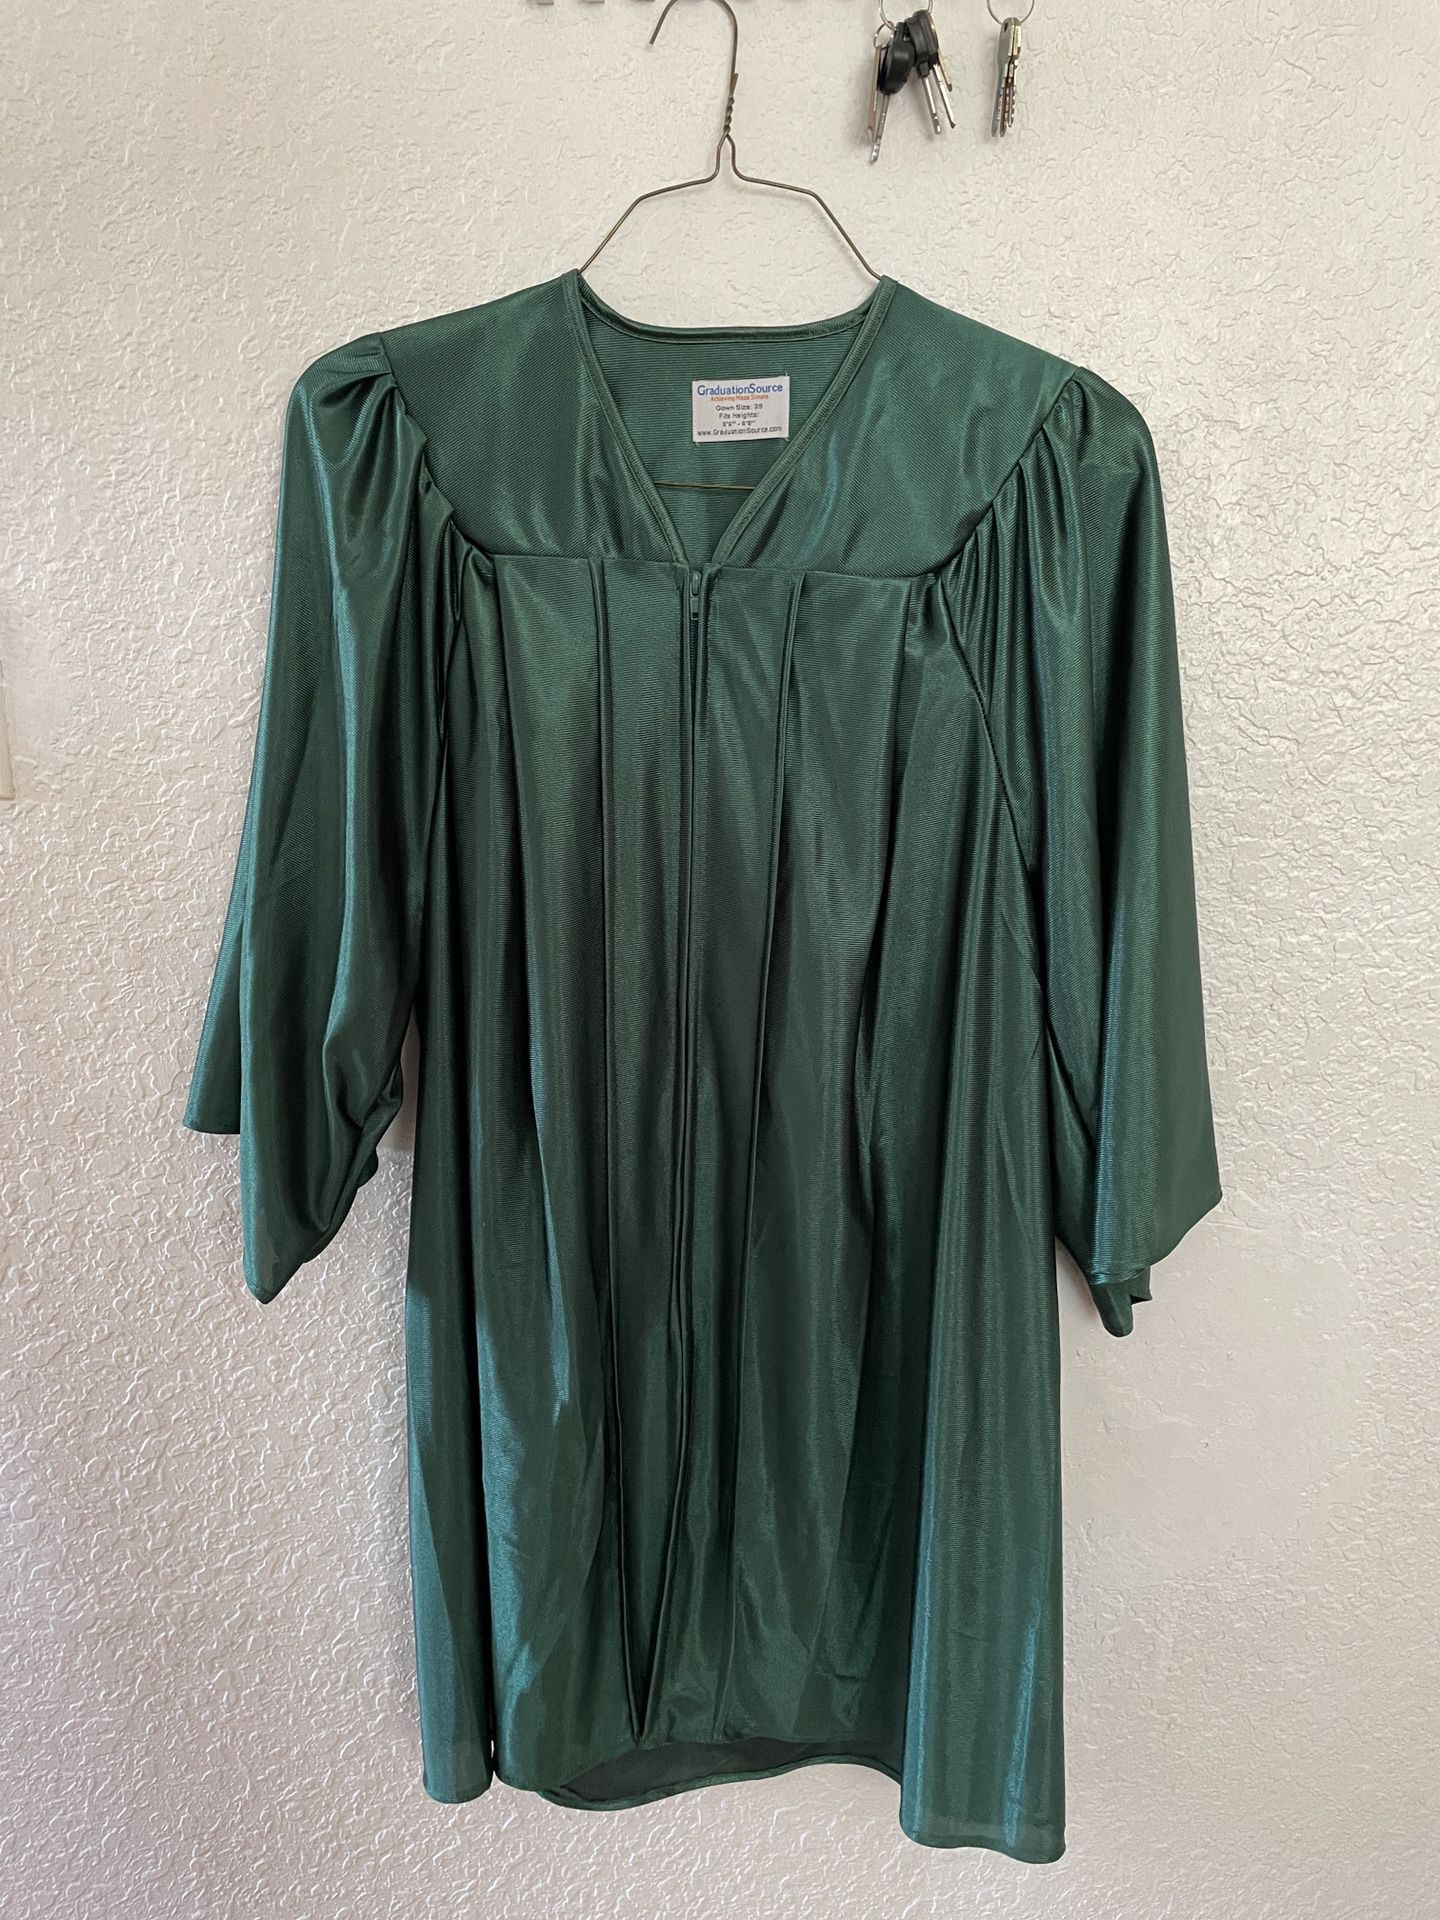 Graduation Gown LIKE NEW